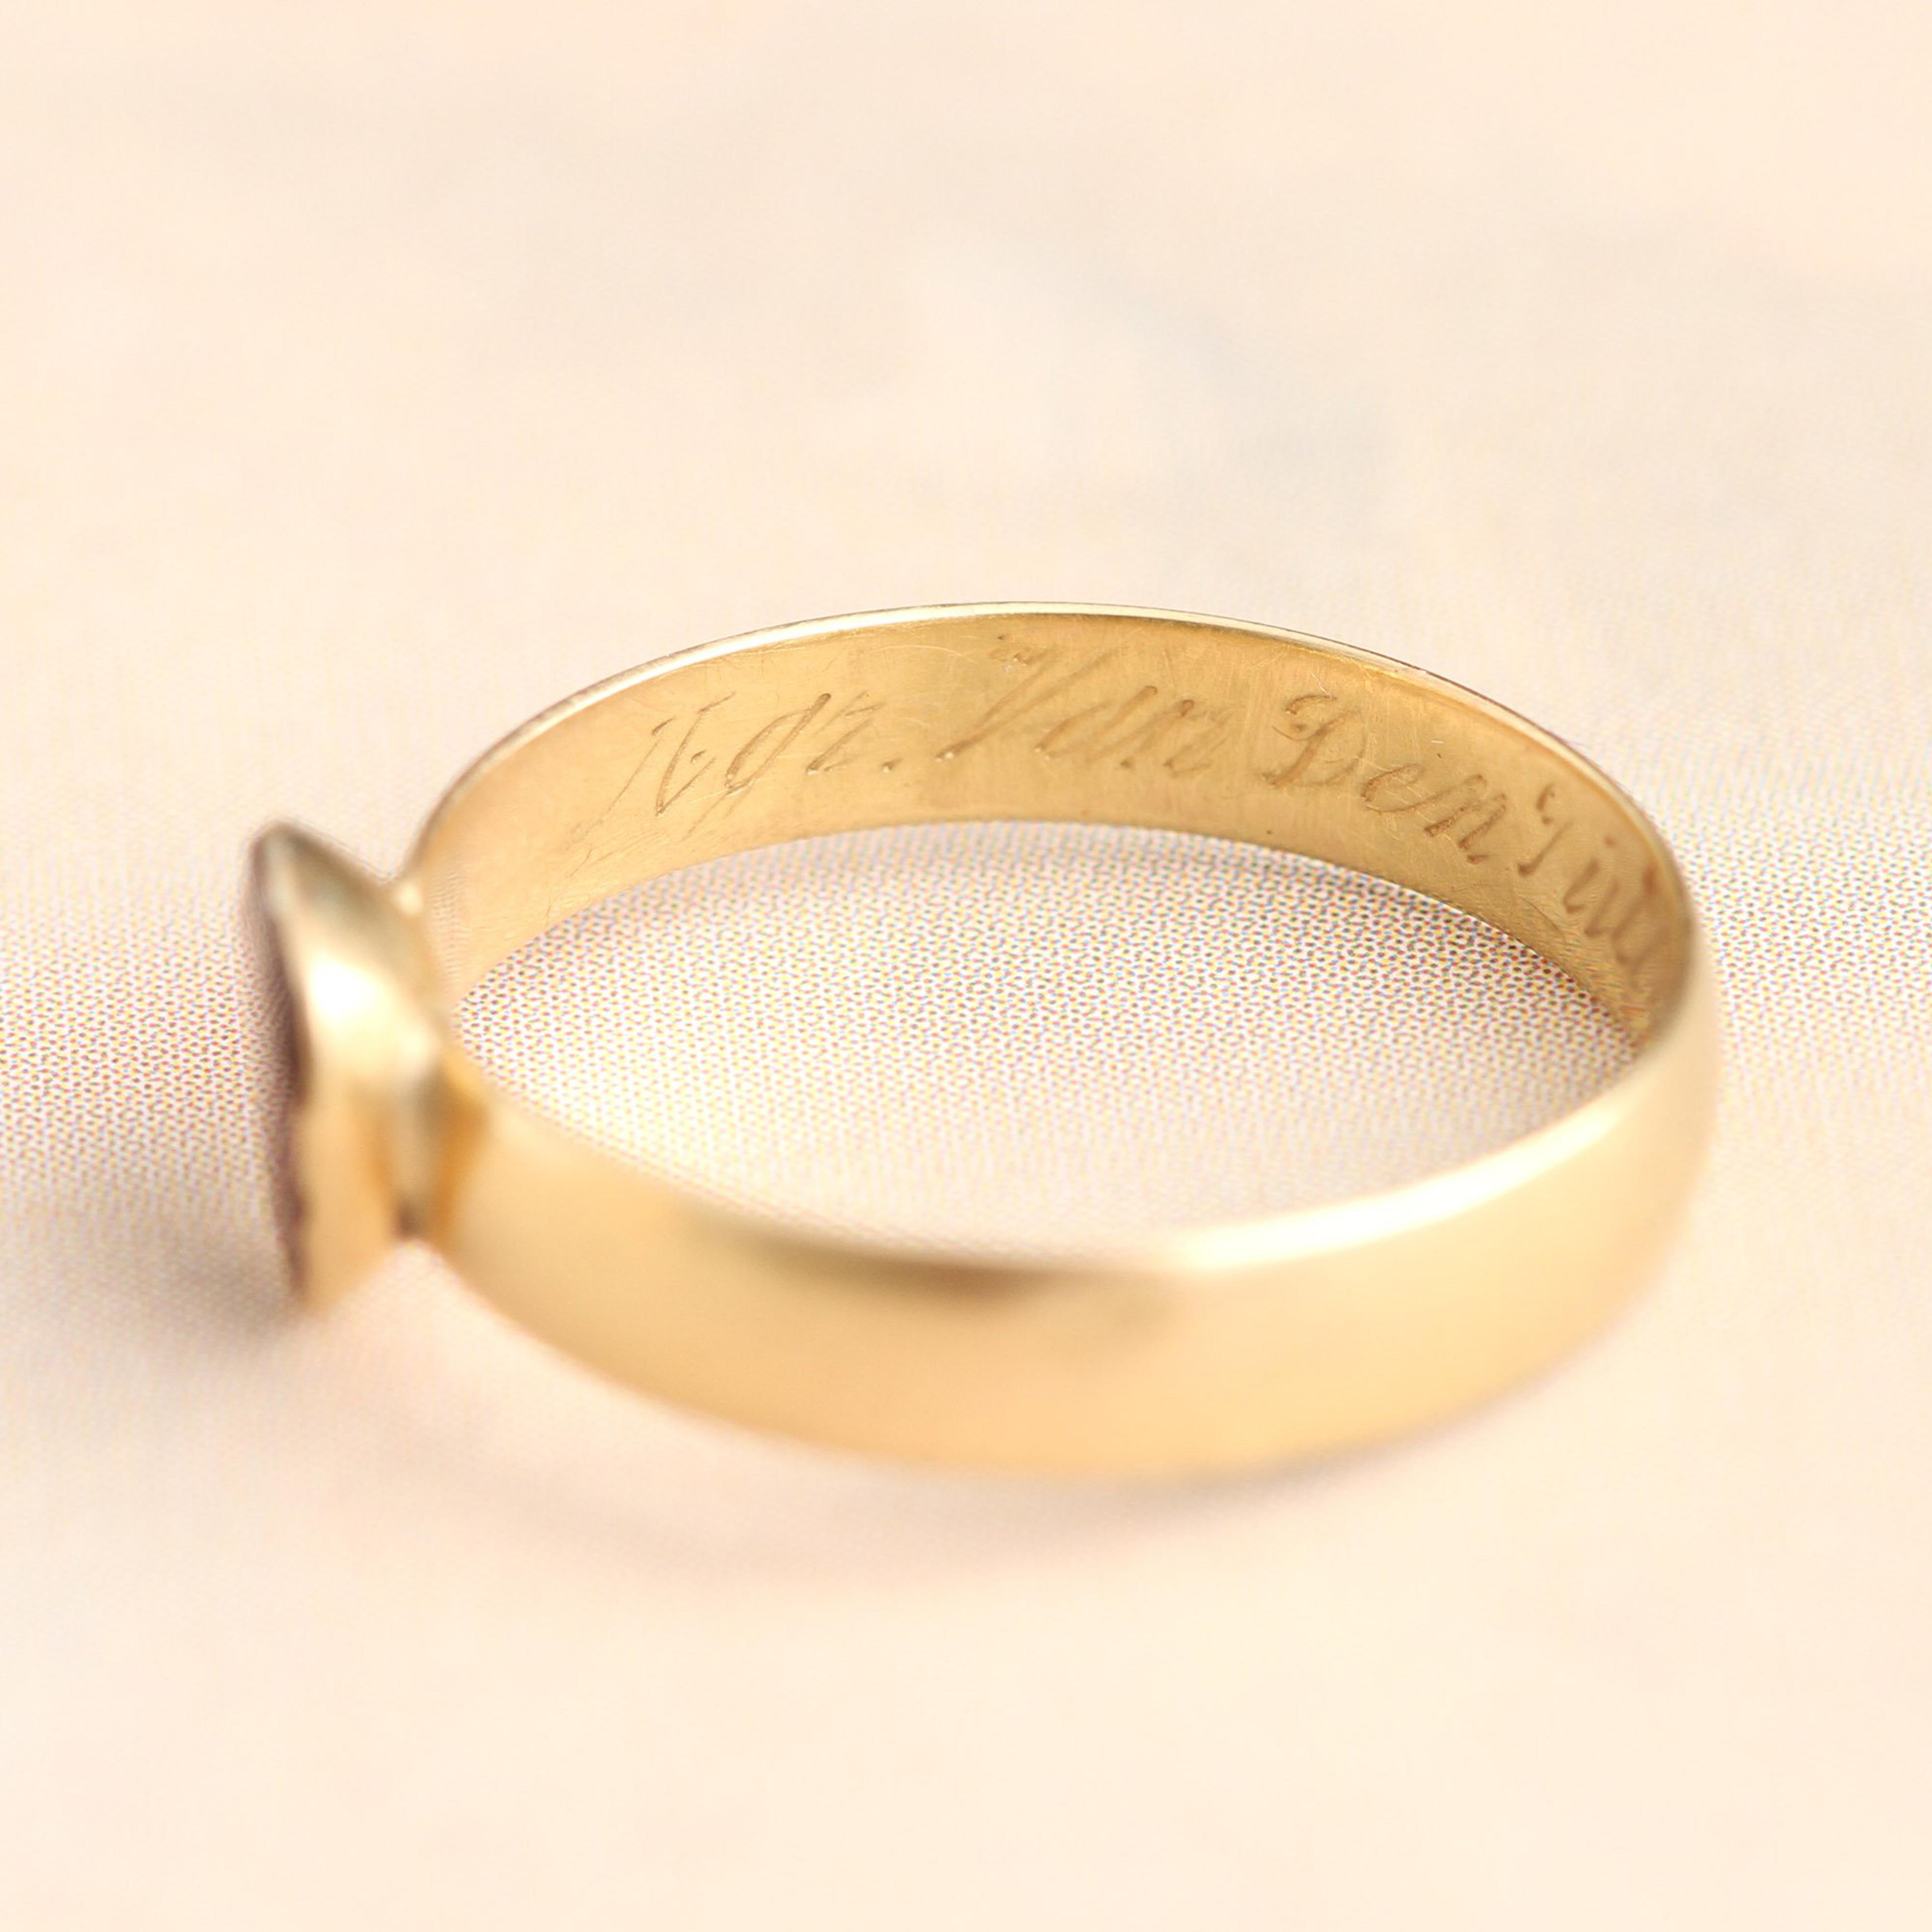 Inscription detail of the 19th Century Belgian Garnet Heart Wedding Ring